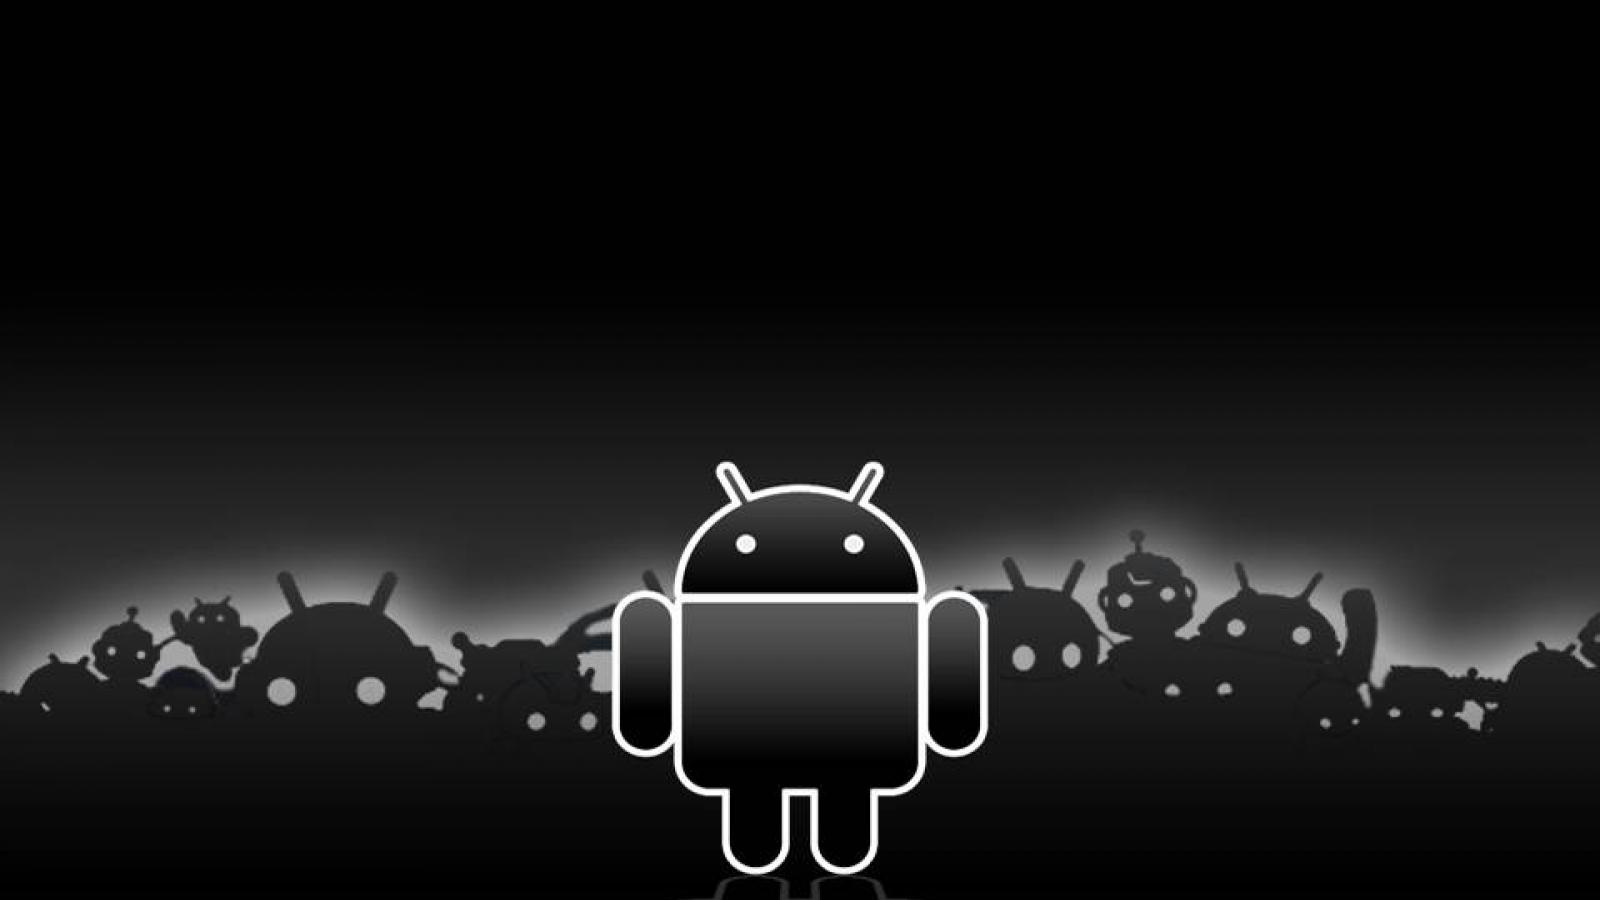 Dark Android Image Wallpaper High Resolution Wallarthd.com